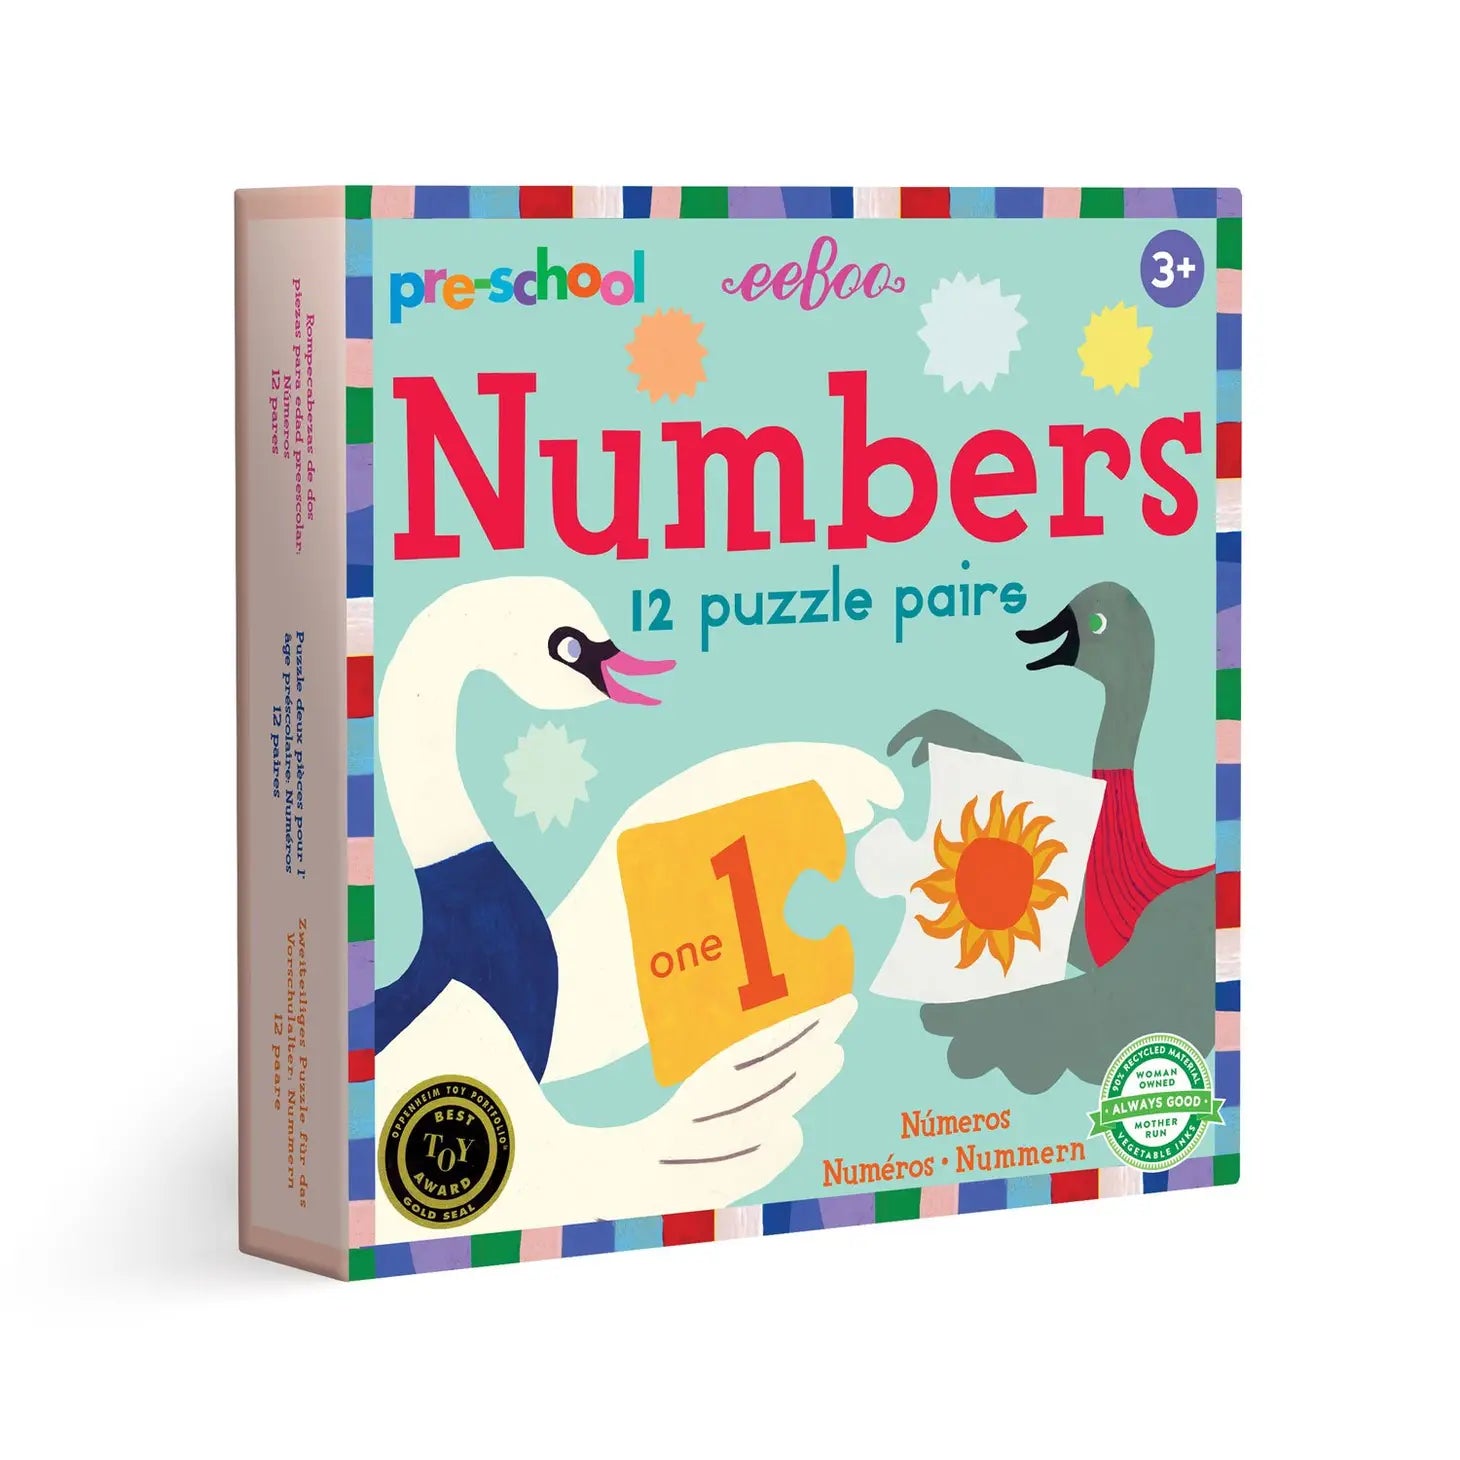 Preschool Numbers Puzzle Pairs Game